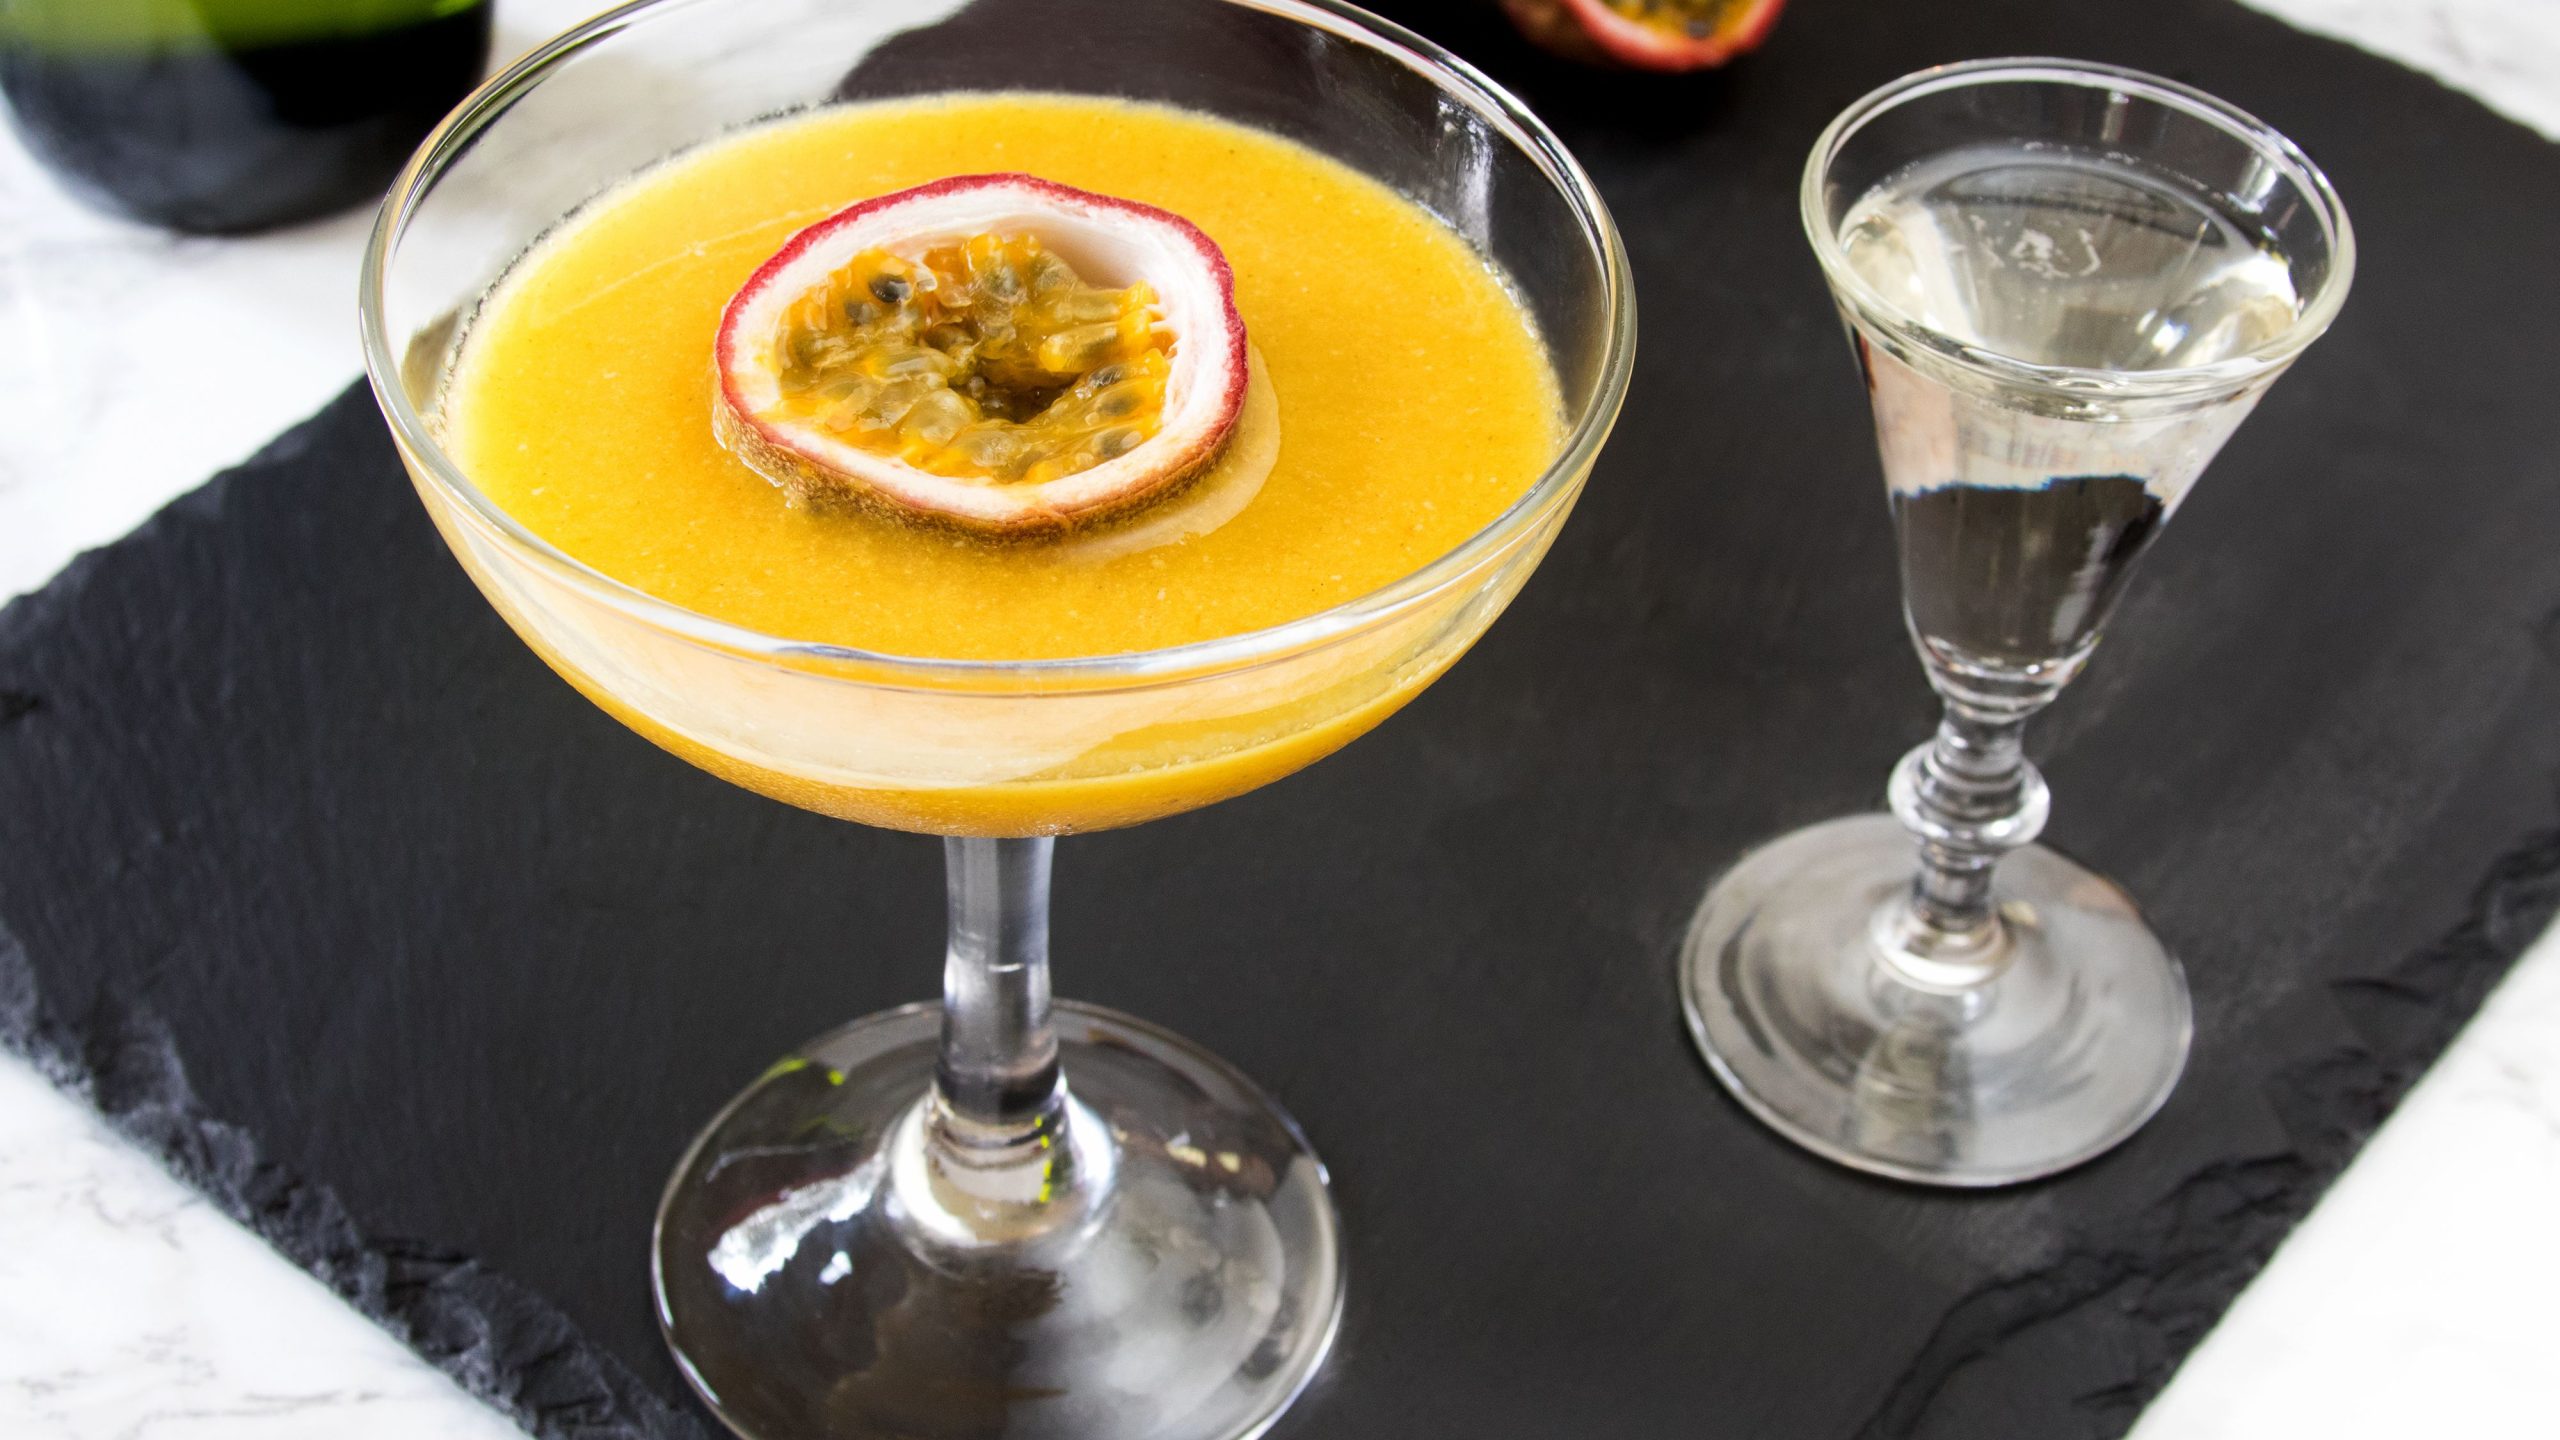 Surprise acquaintances and strangers with this Pornstar martini recipe post thumbnail image